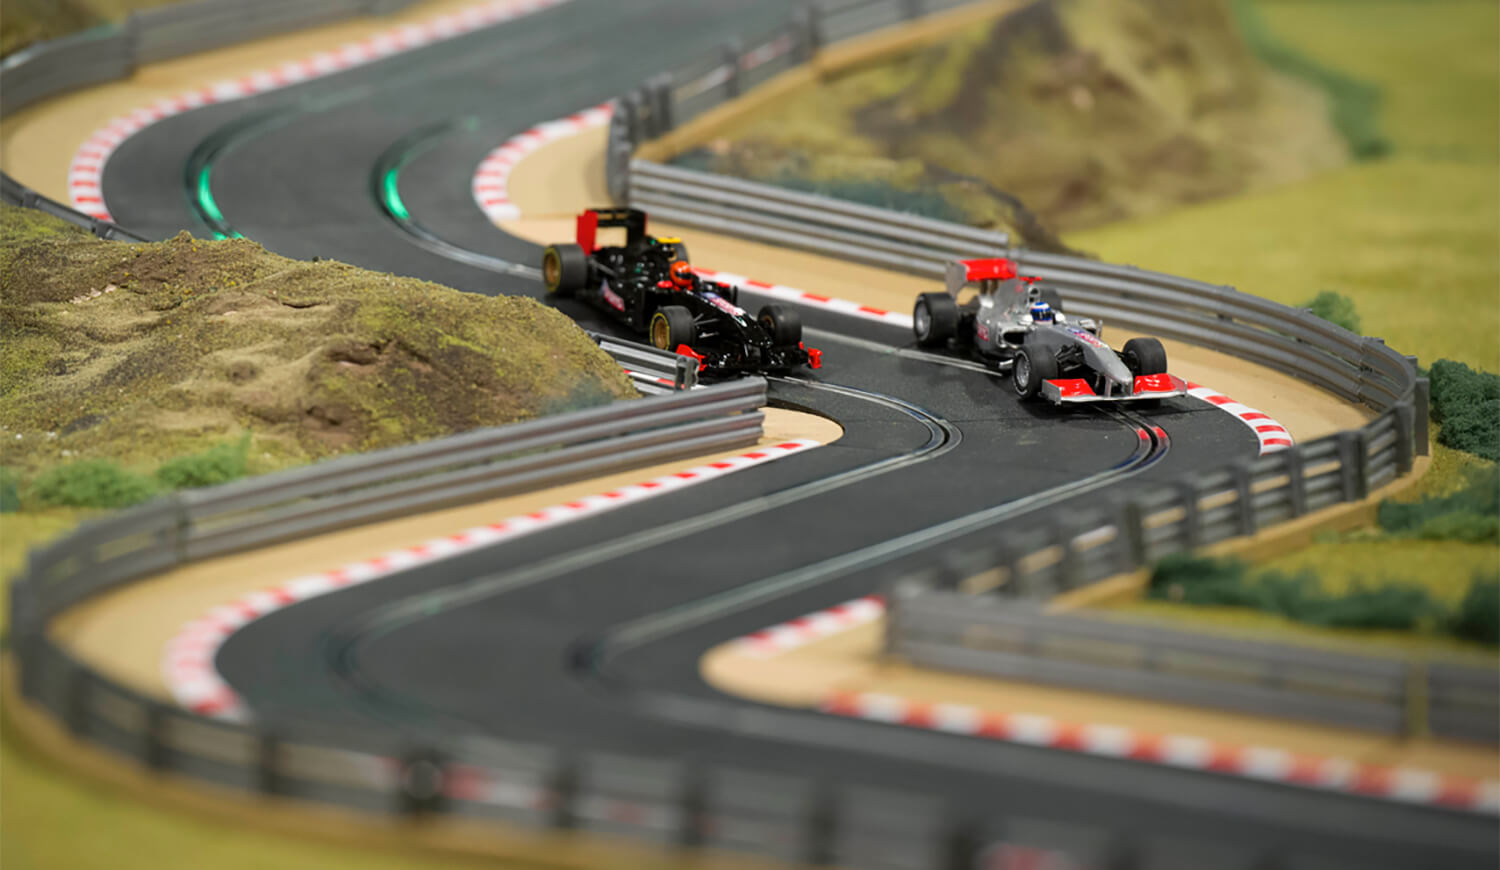 First track. Track f1 BŞH. Трековые автогонки «Slot car». Carrera трек формула 1. F1 Racing track.